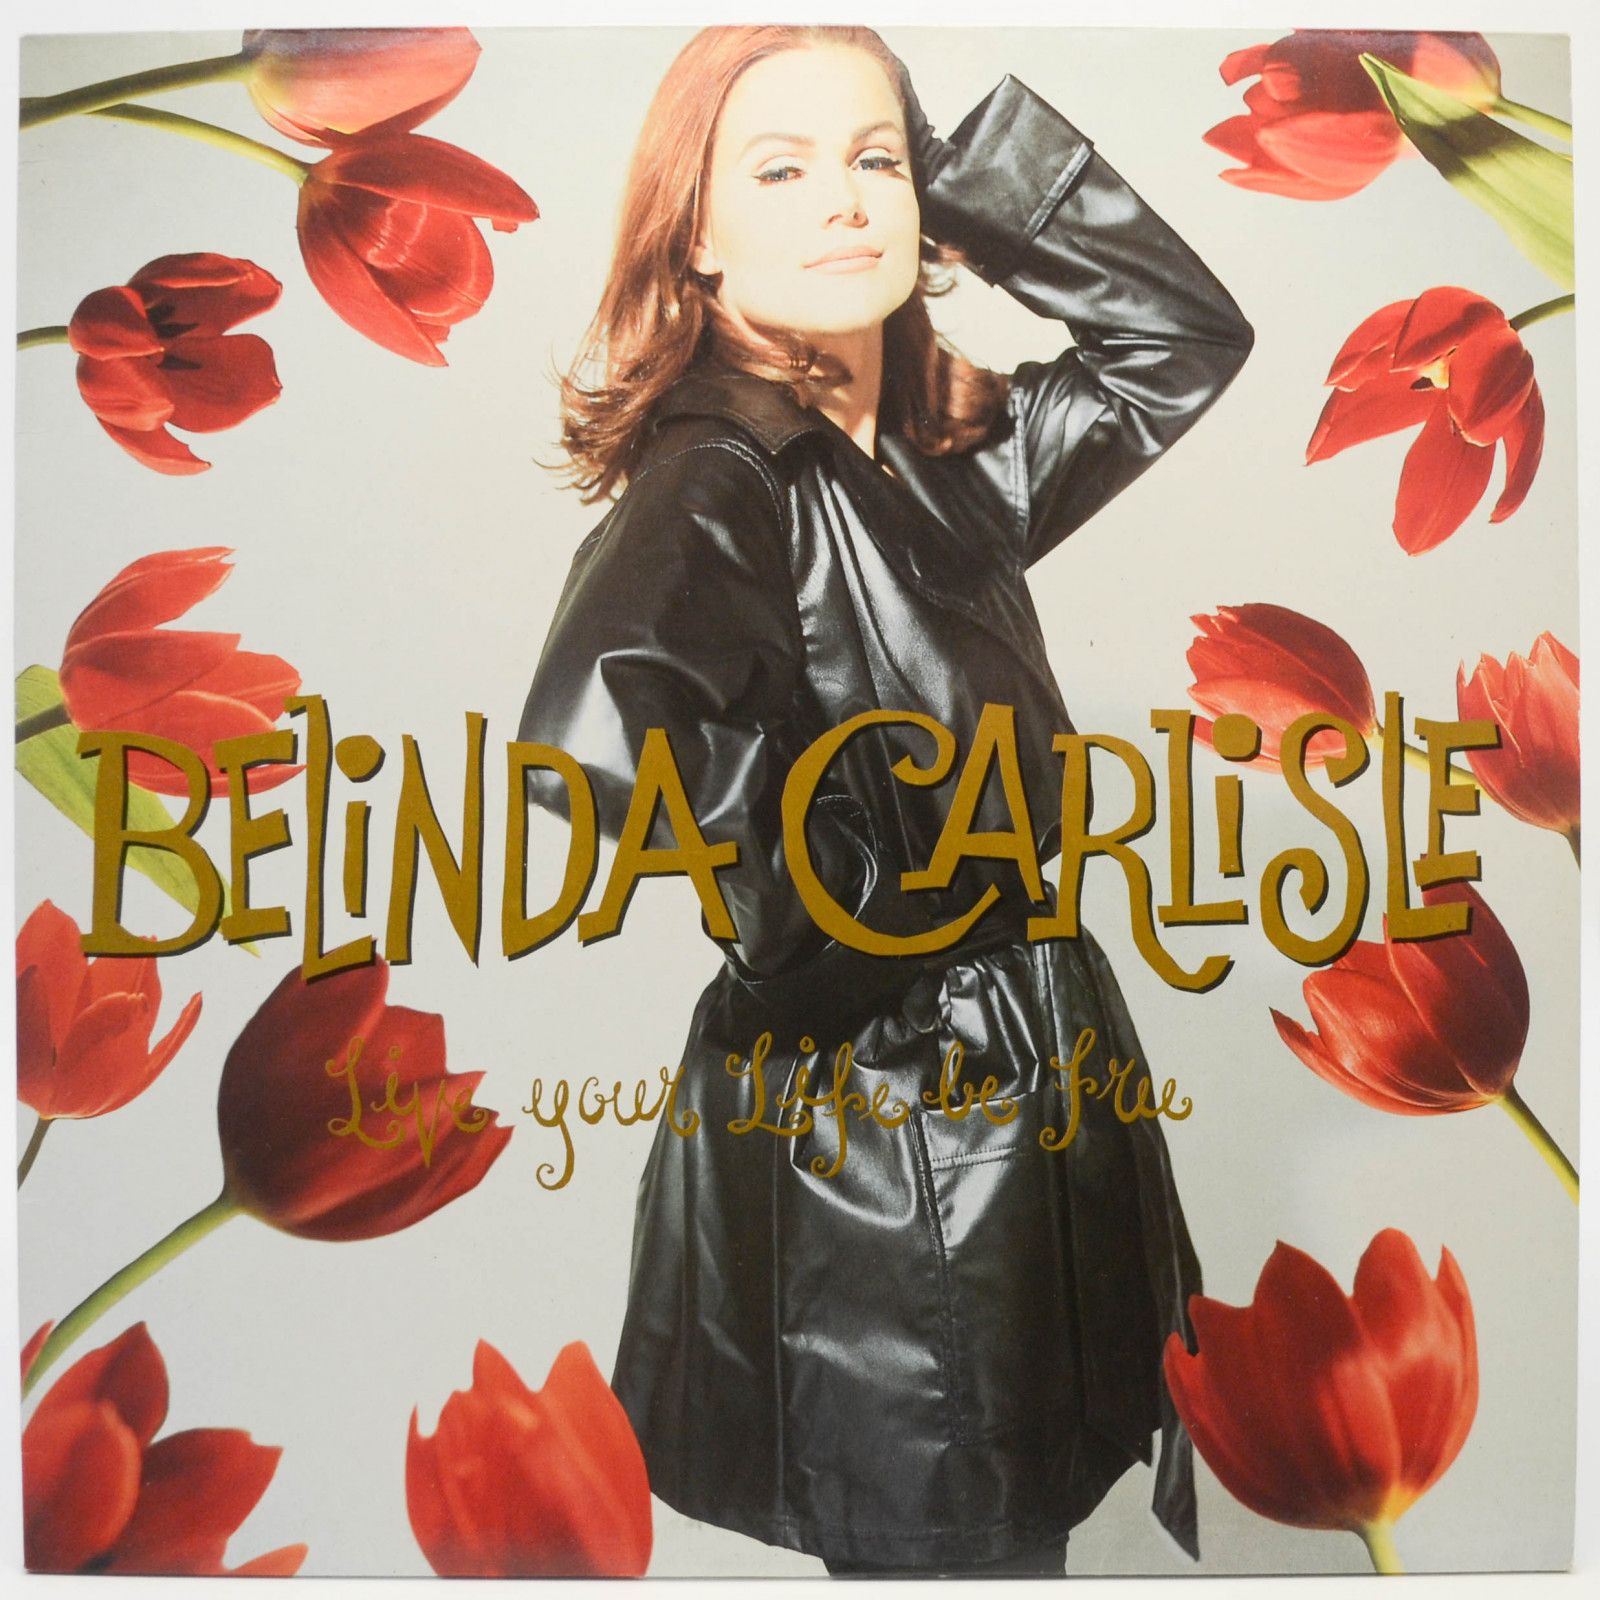 Belinda Carlisle — Live Your Life Be Free, 1991